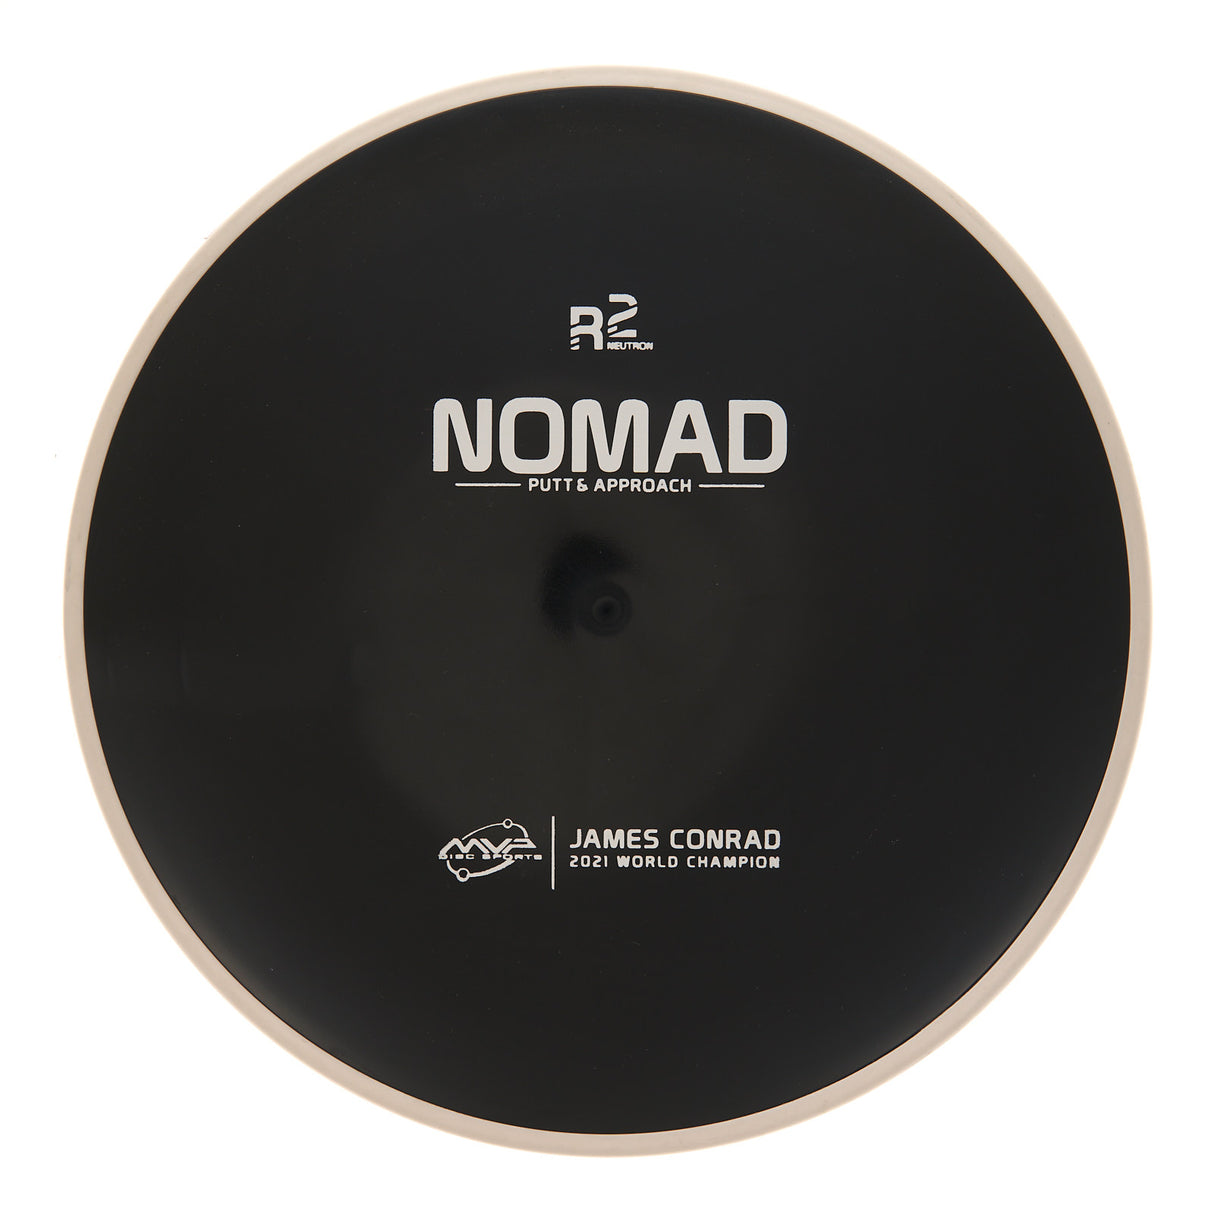 MVP Nomad - R2 172g | Style 0002